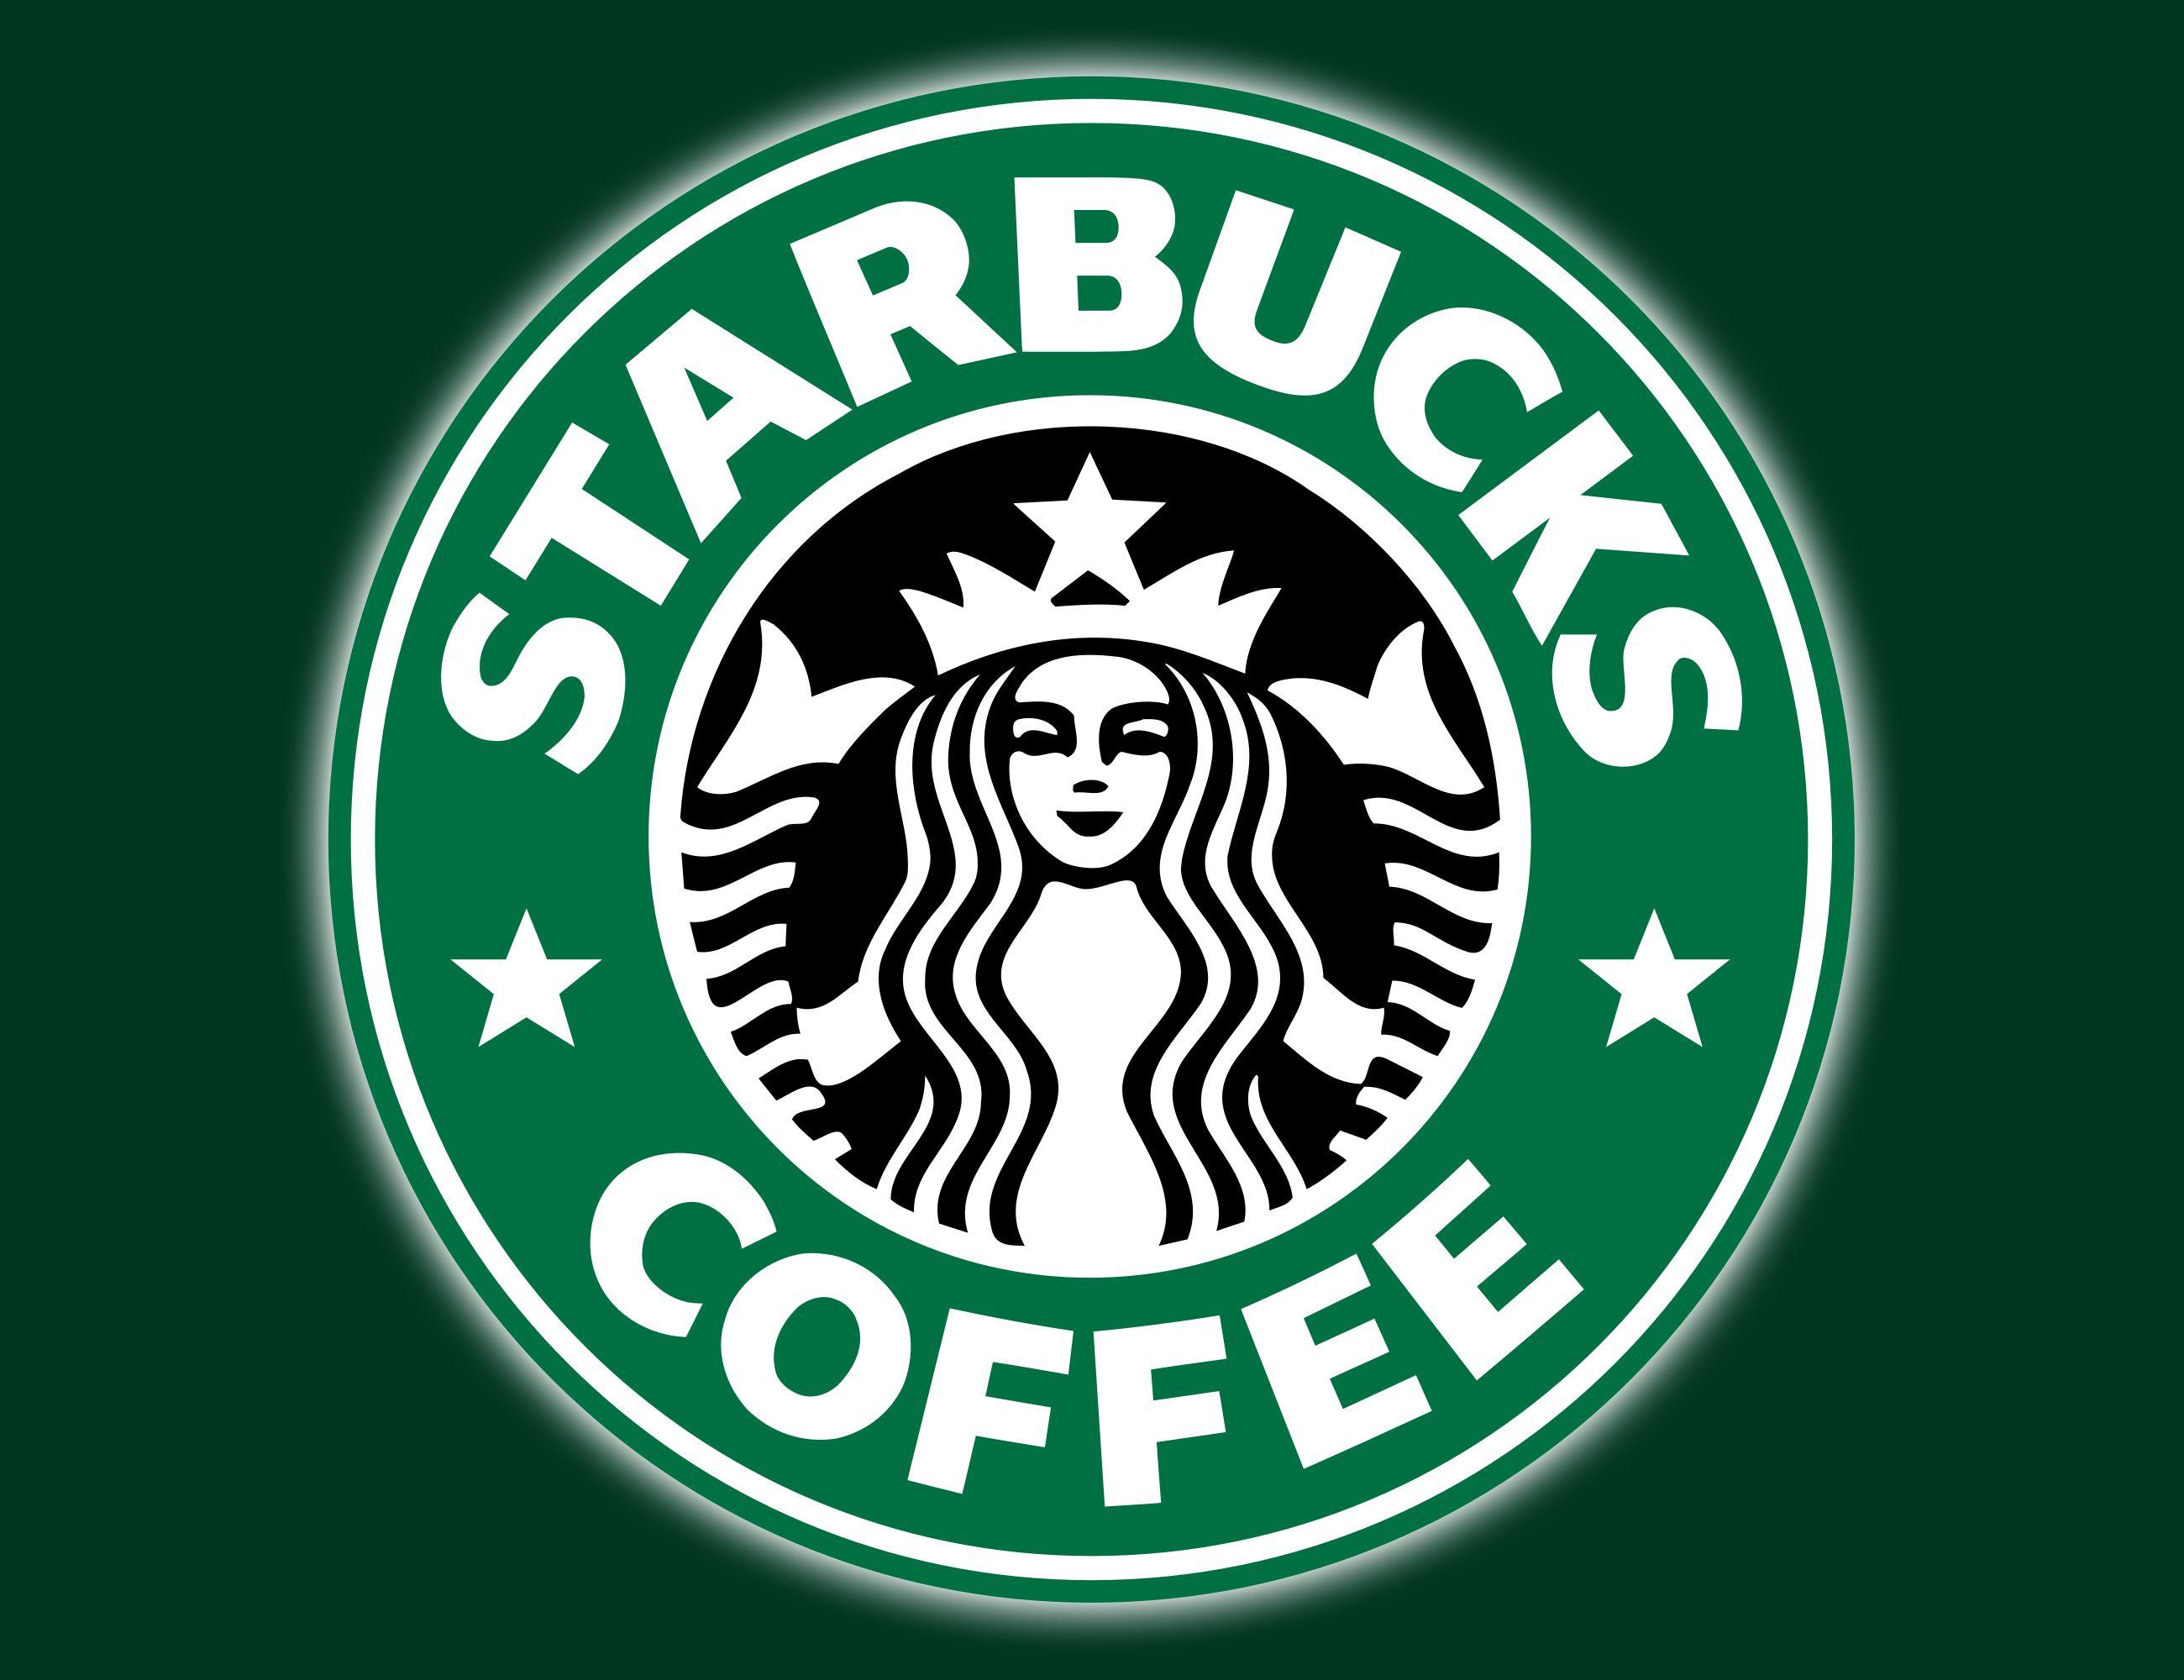 Different Starbucks Logo - Starbucks Logo, symbol meaning, History and Evolution